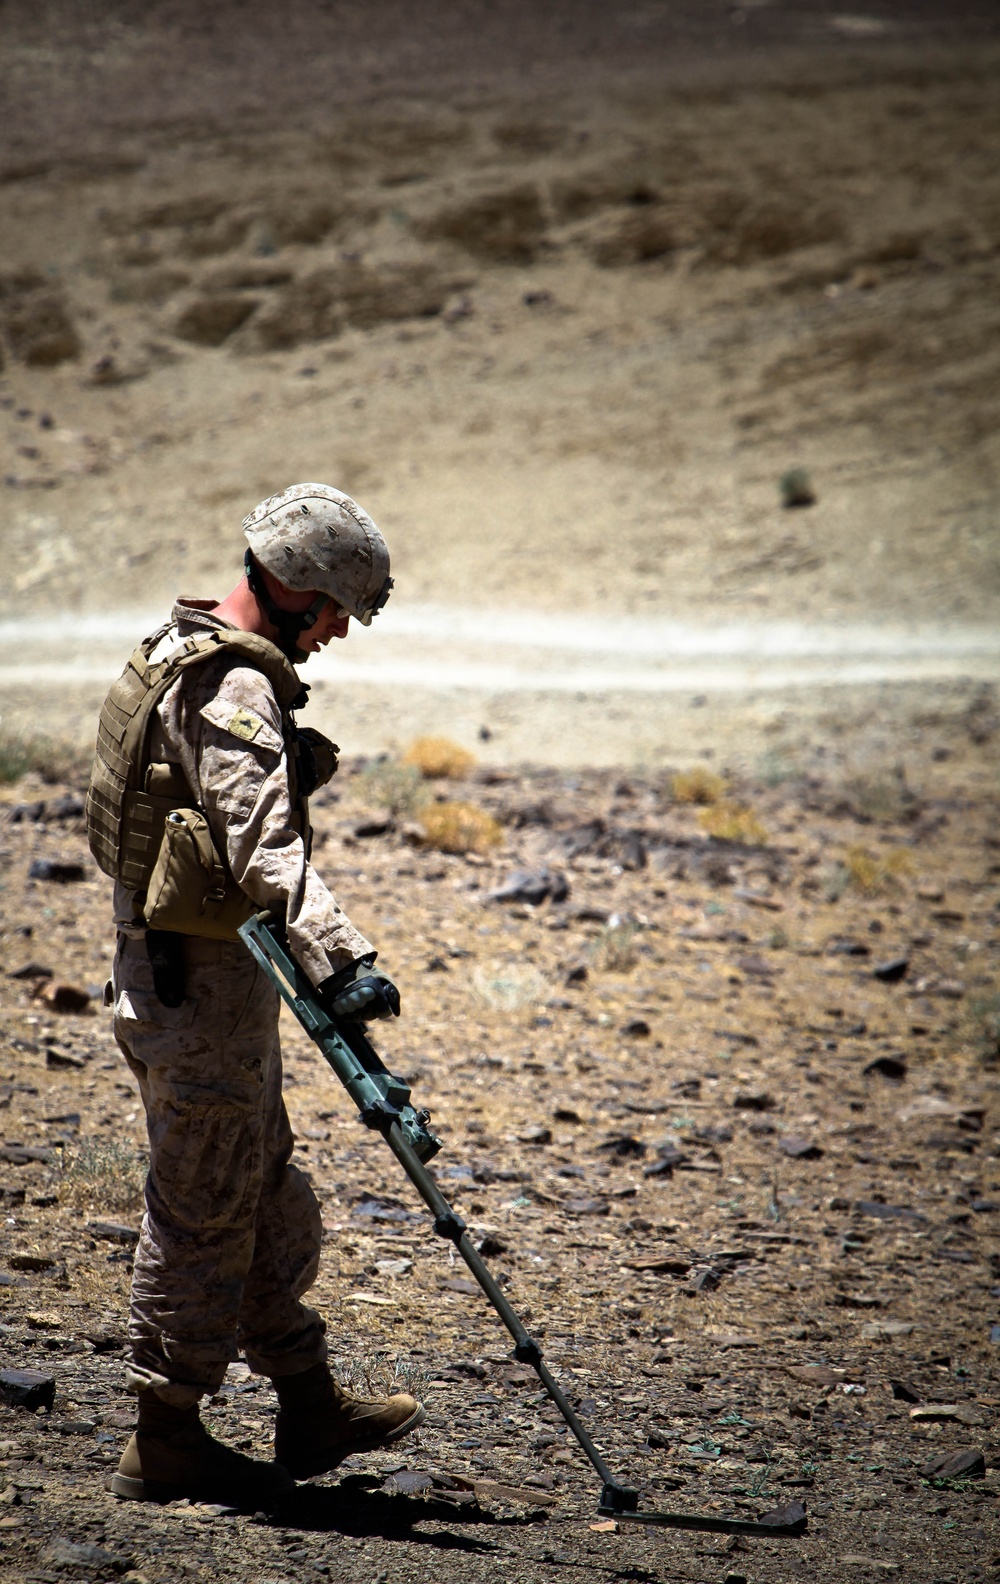 Ballistic Underwear Make Their Way to Marines in Afghanistan